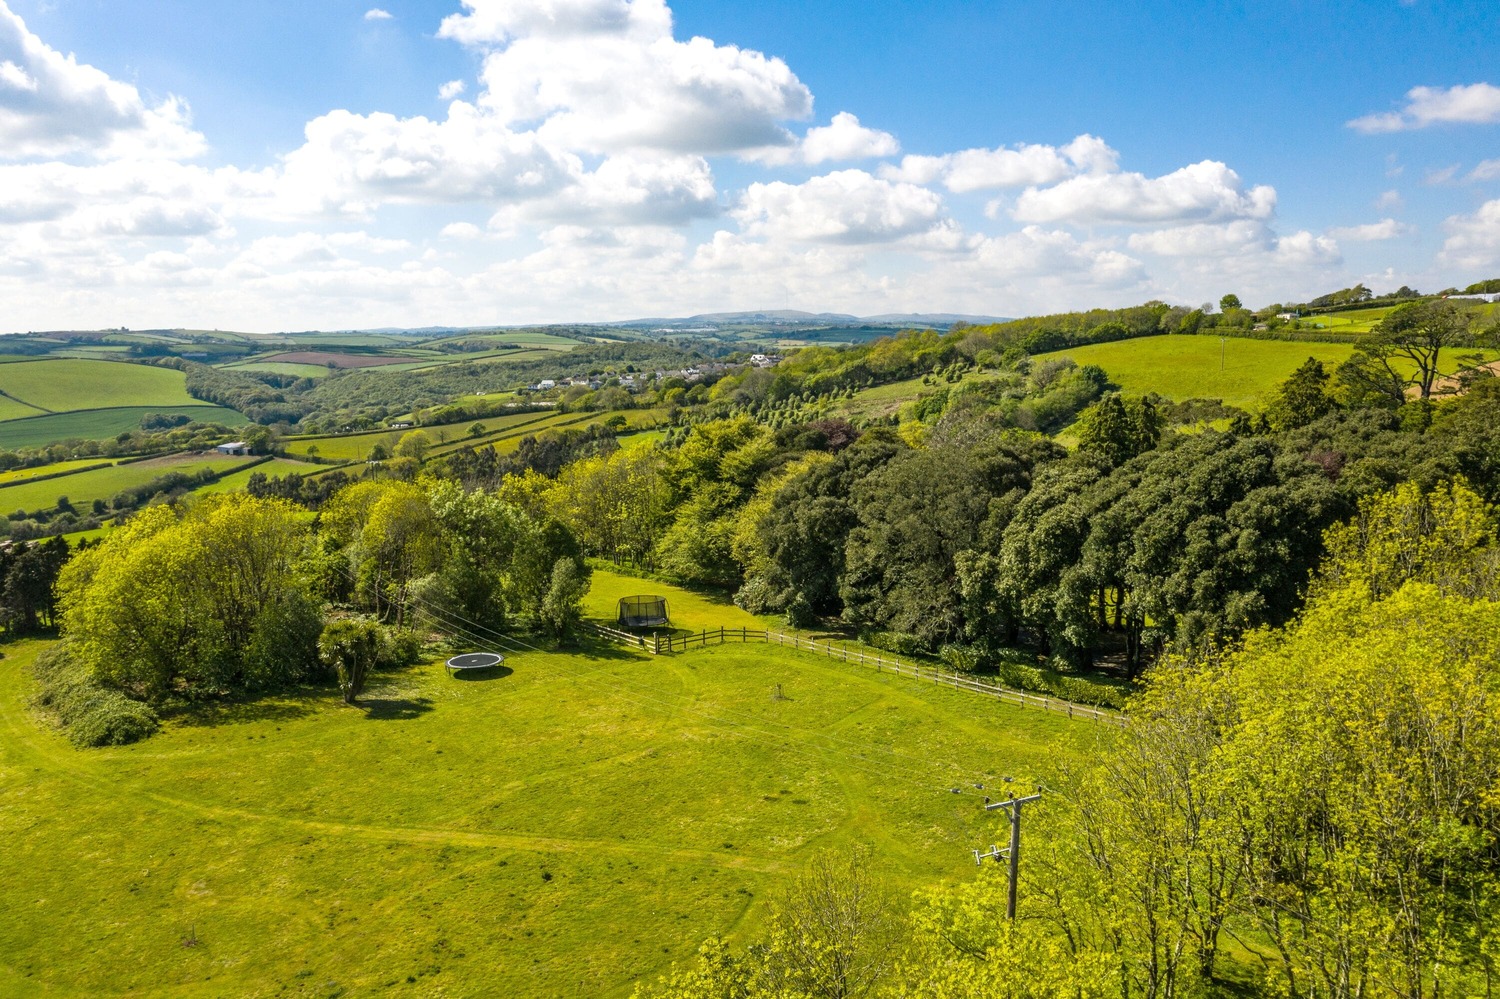 Birdseye view of the Cornish countryside